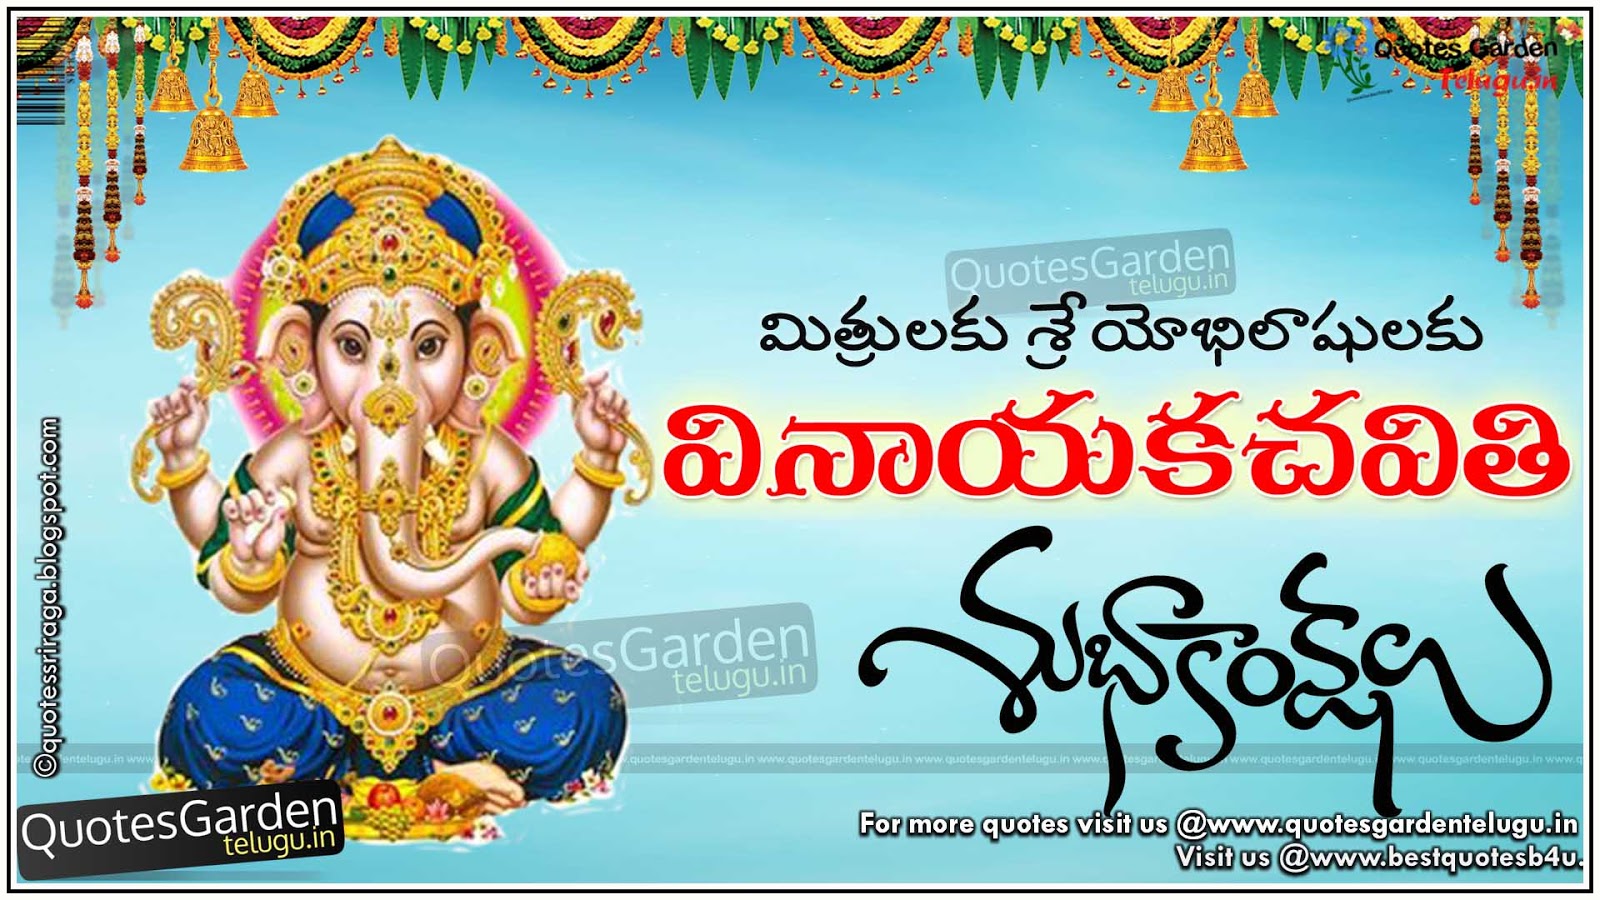 Telugu Vinayaka chavithi Greetings wishes quotes | QUOTES GARDEN ...